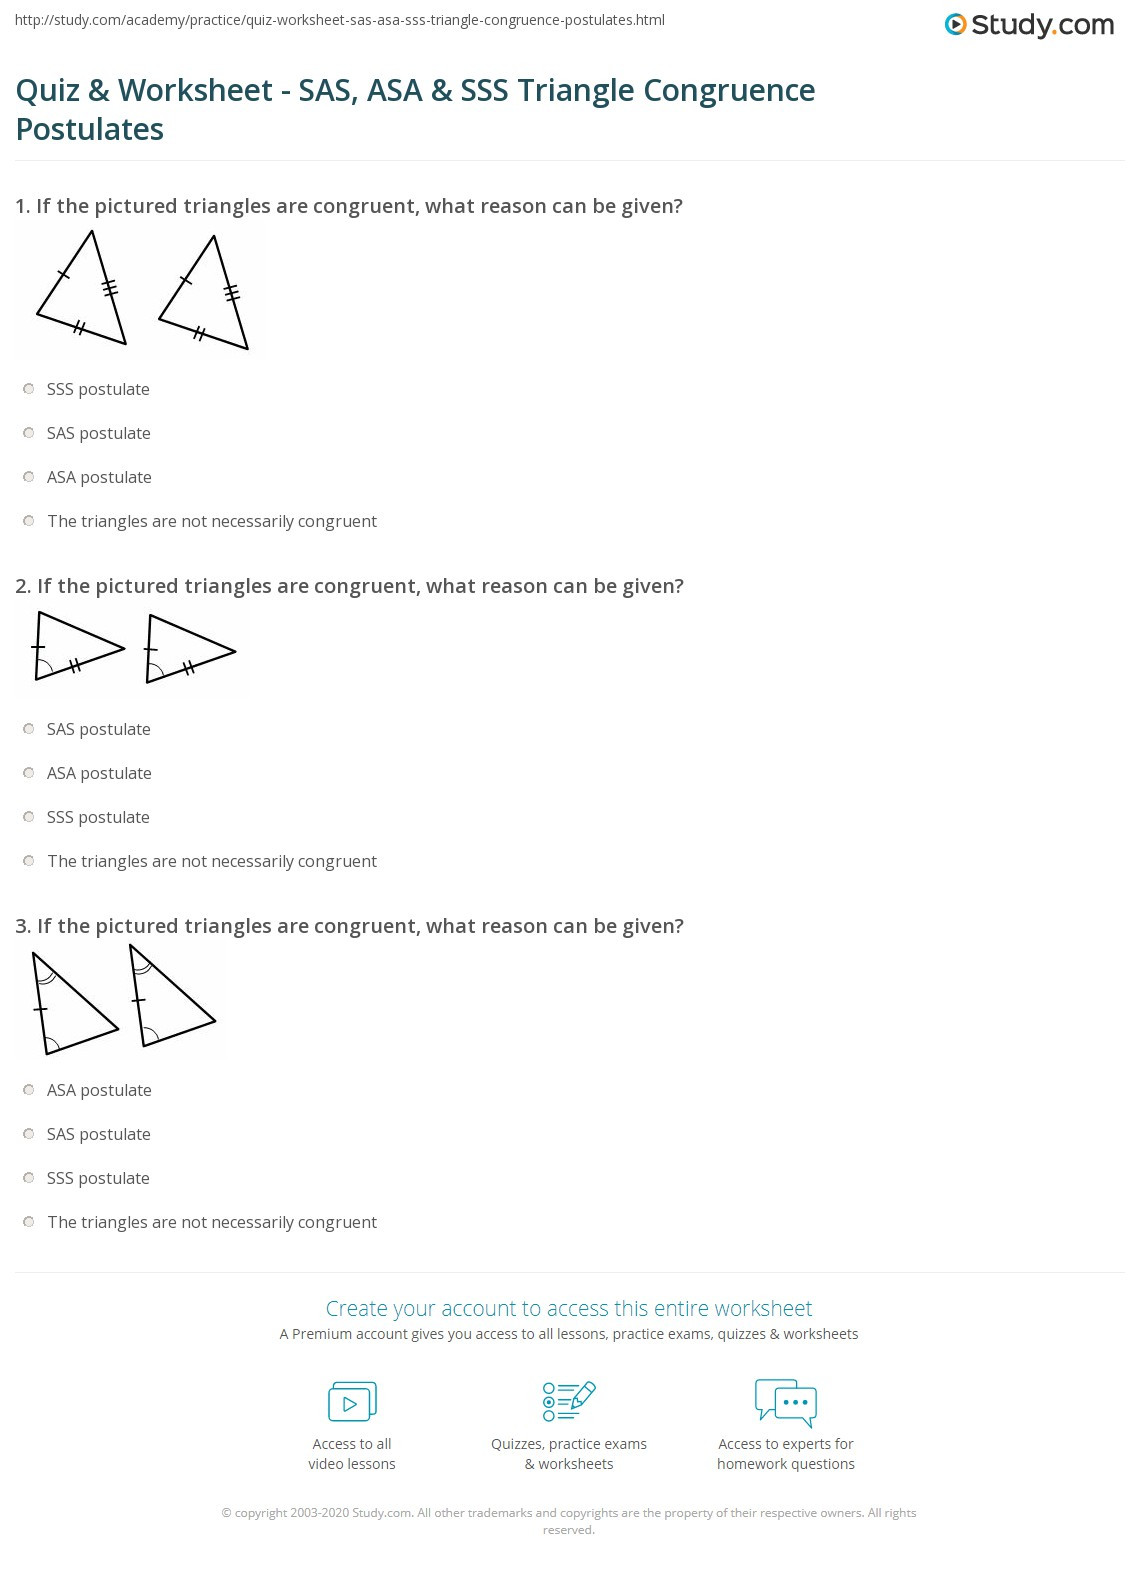 Triangle Congruence Proof Worksheet Quiz &amp; Worksheet Sas asa &amp; Sss Triangle Congruence